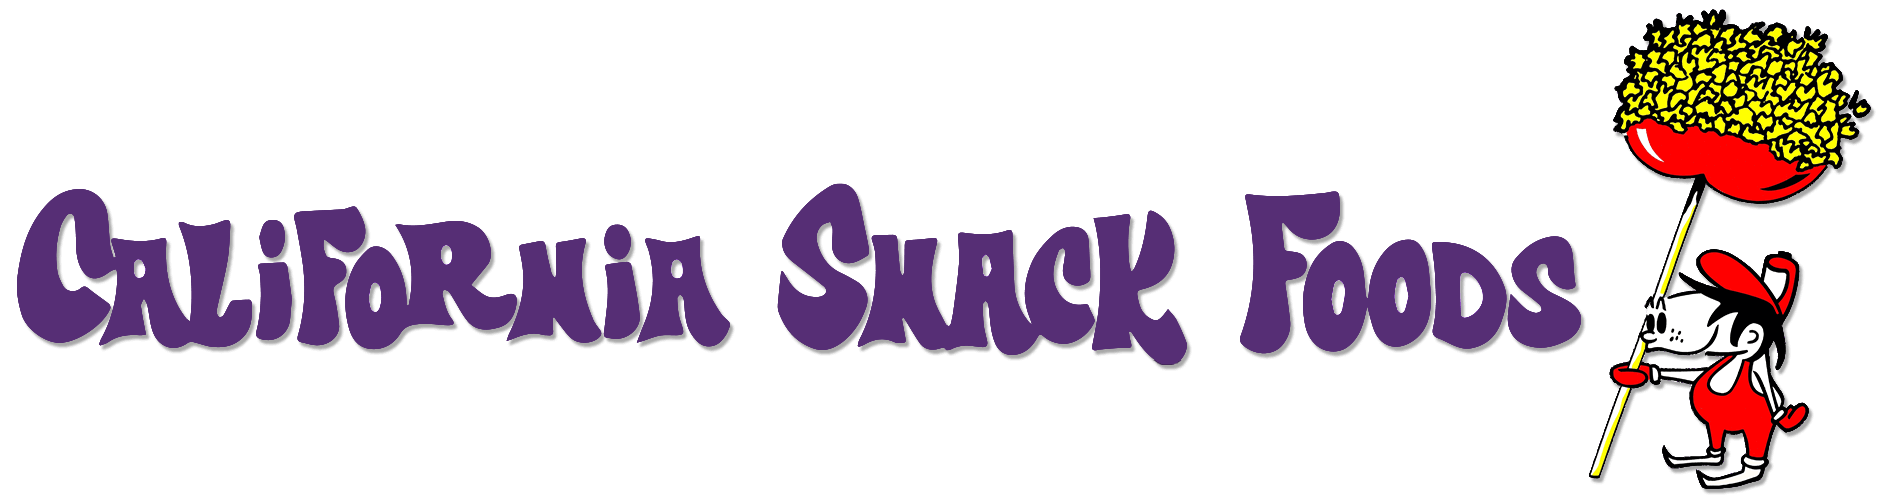 California Snack Foods Logo